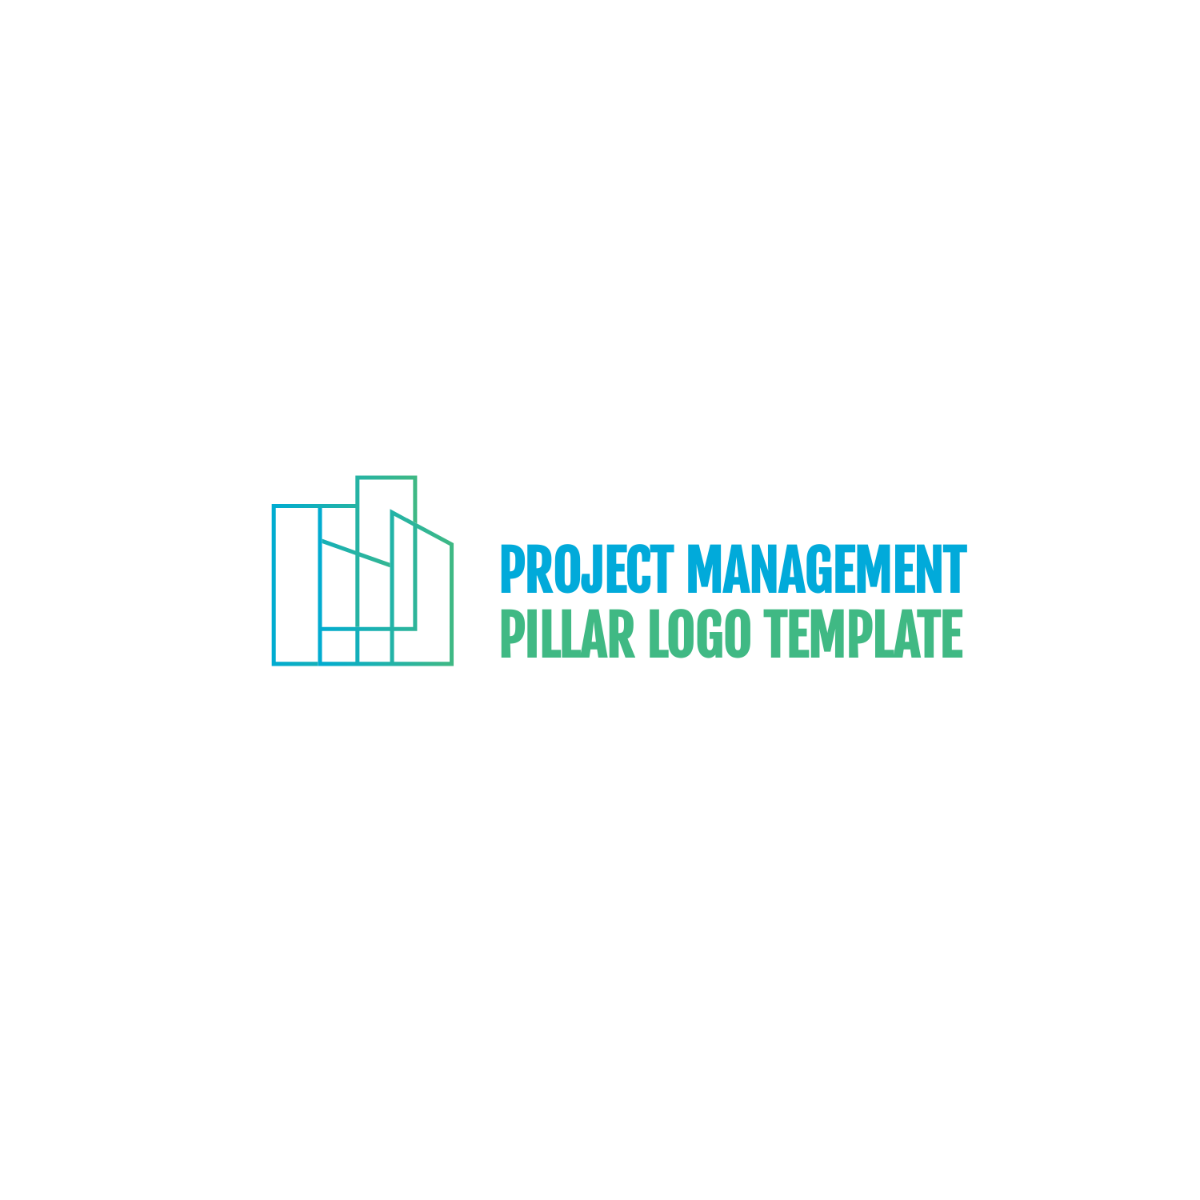 Project Management Pillar Logo